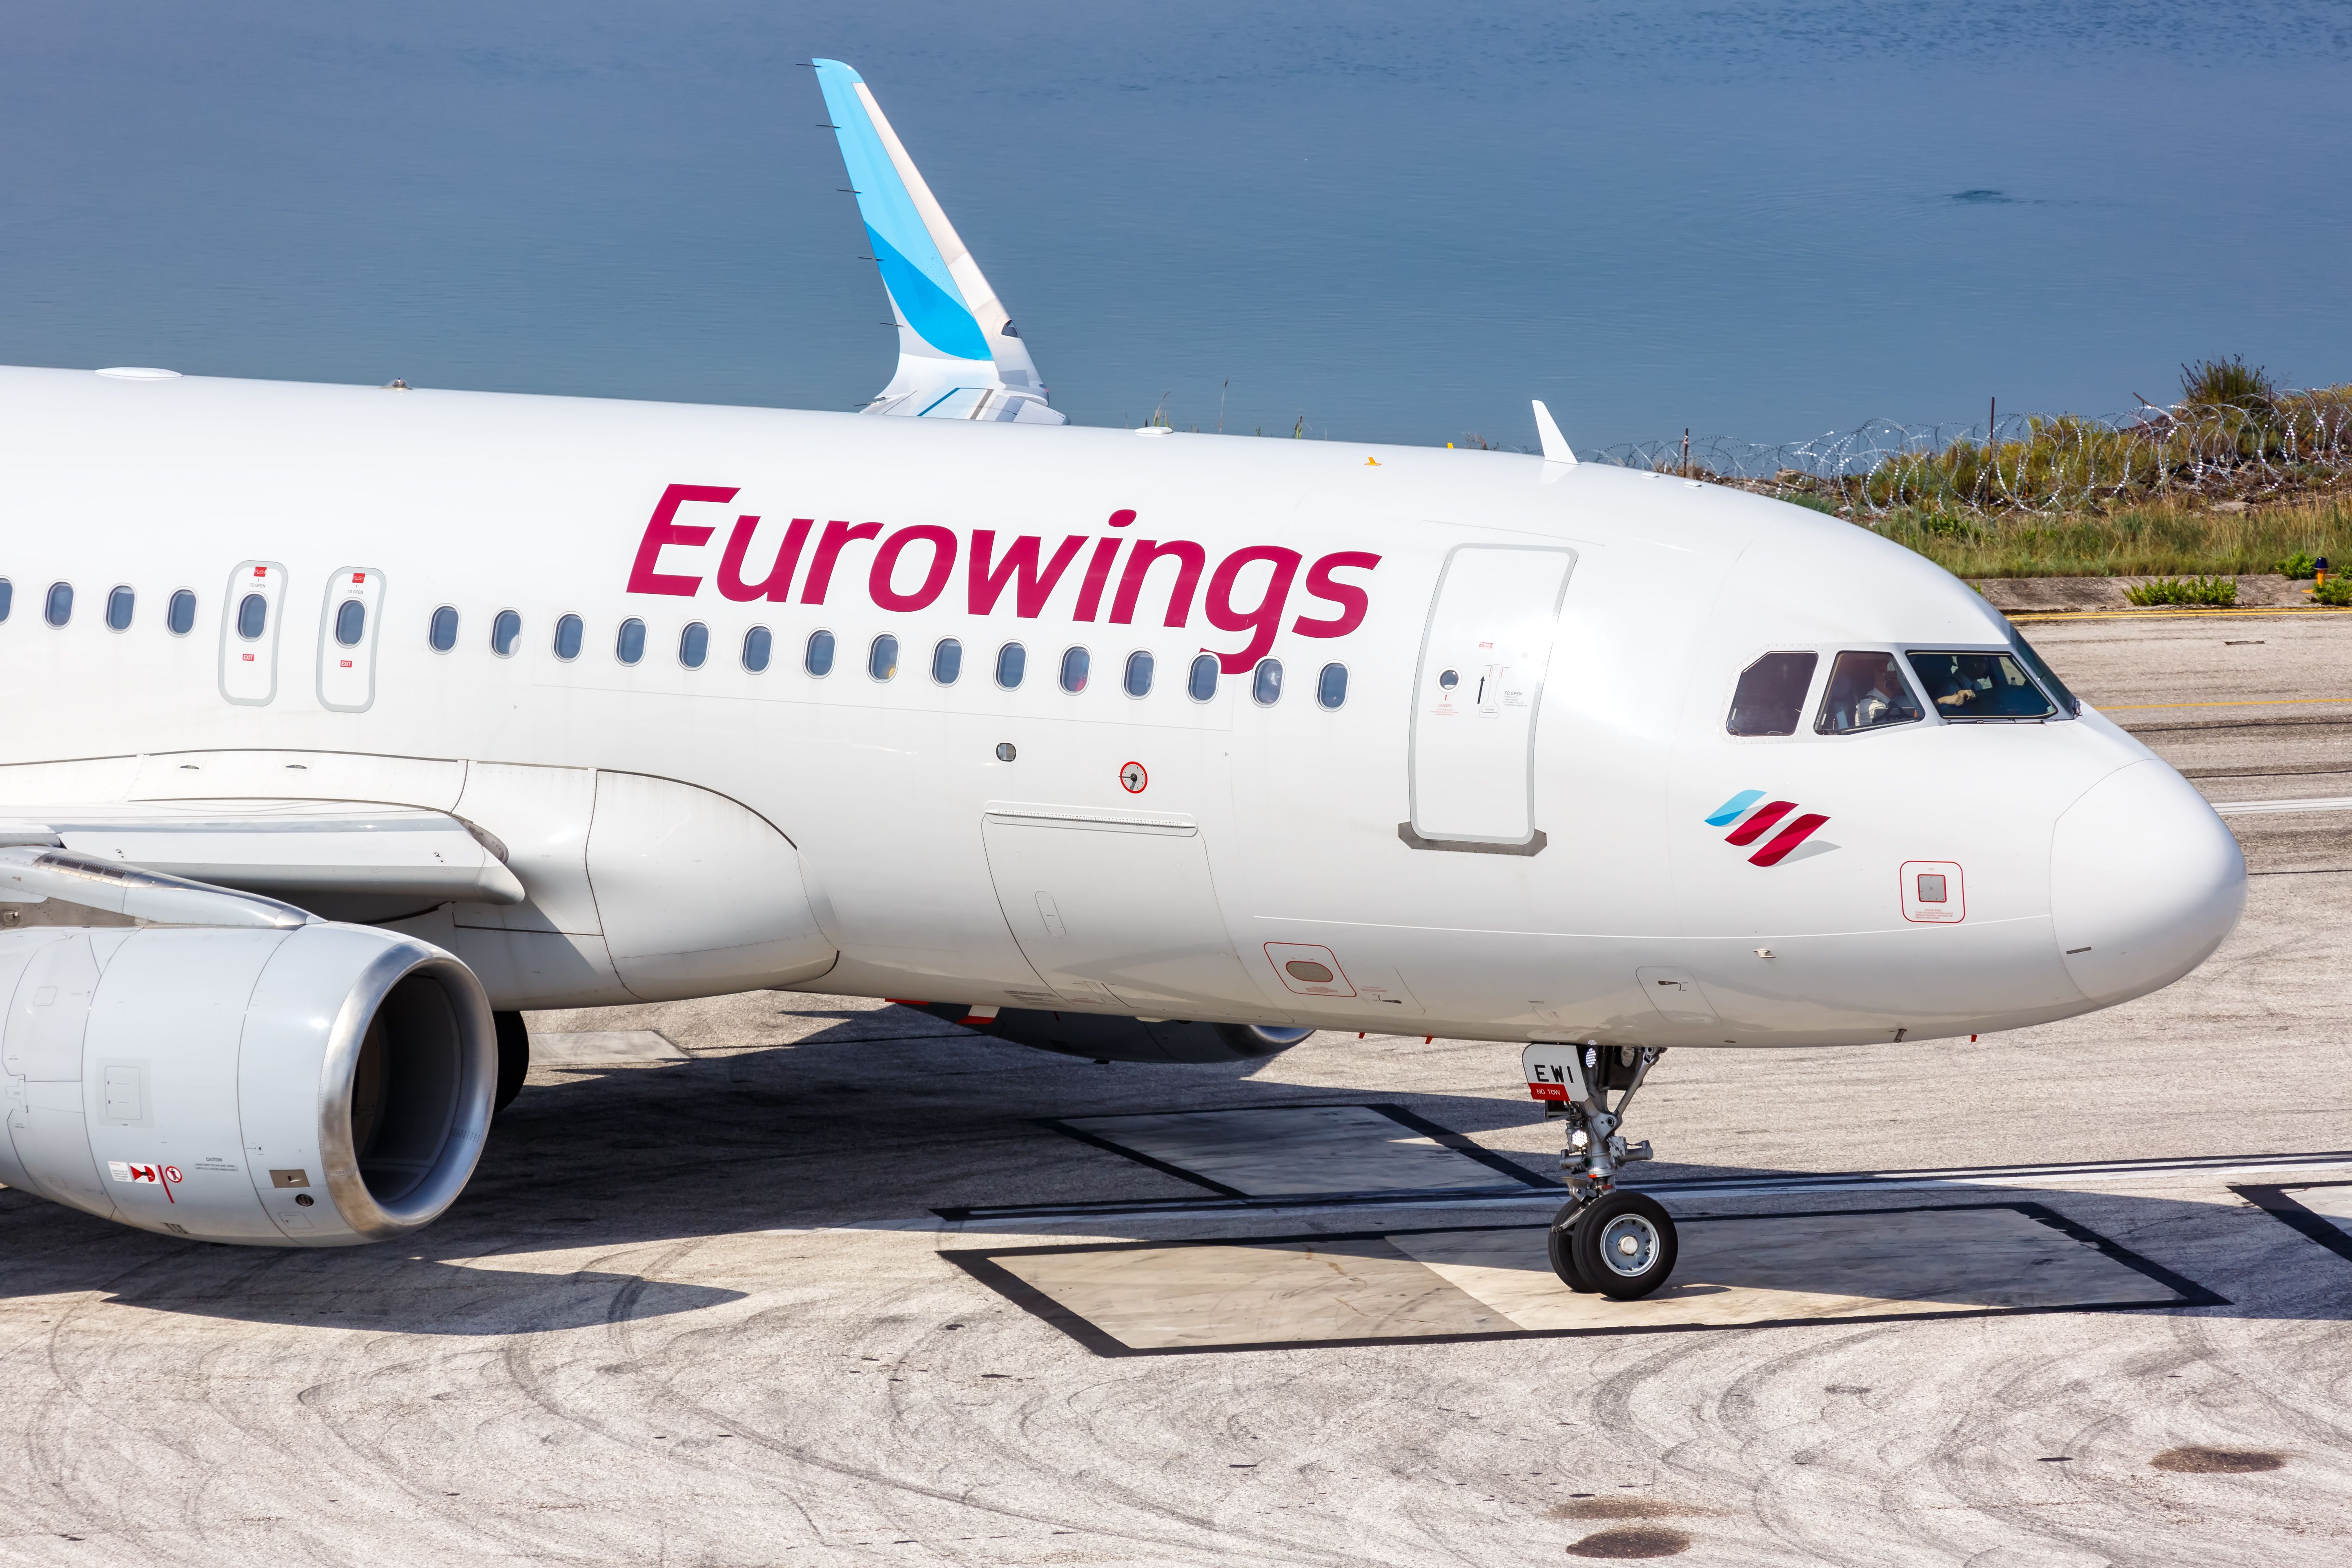 Eurowings Airbus A320-200